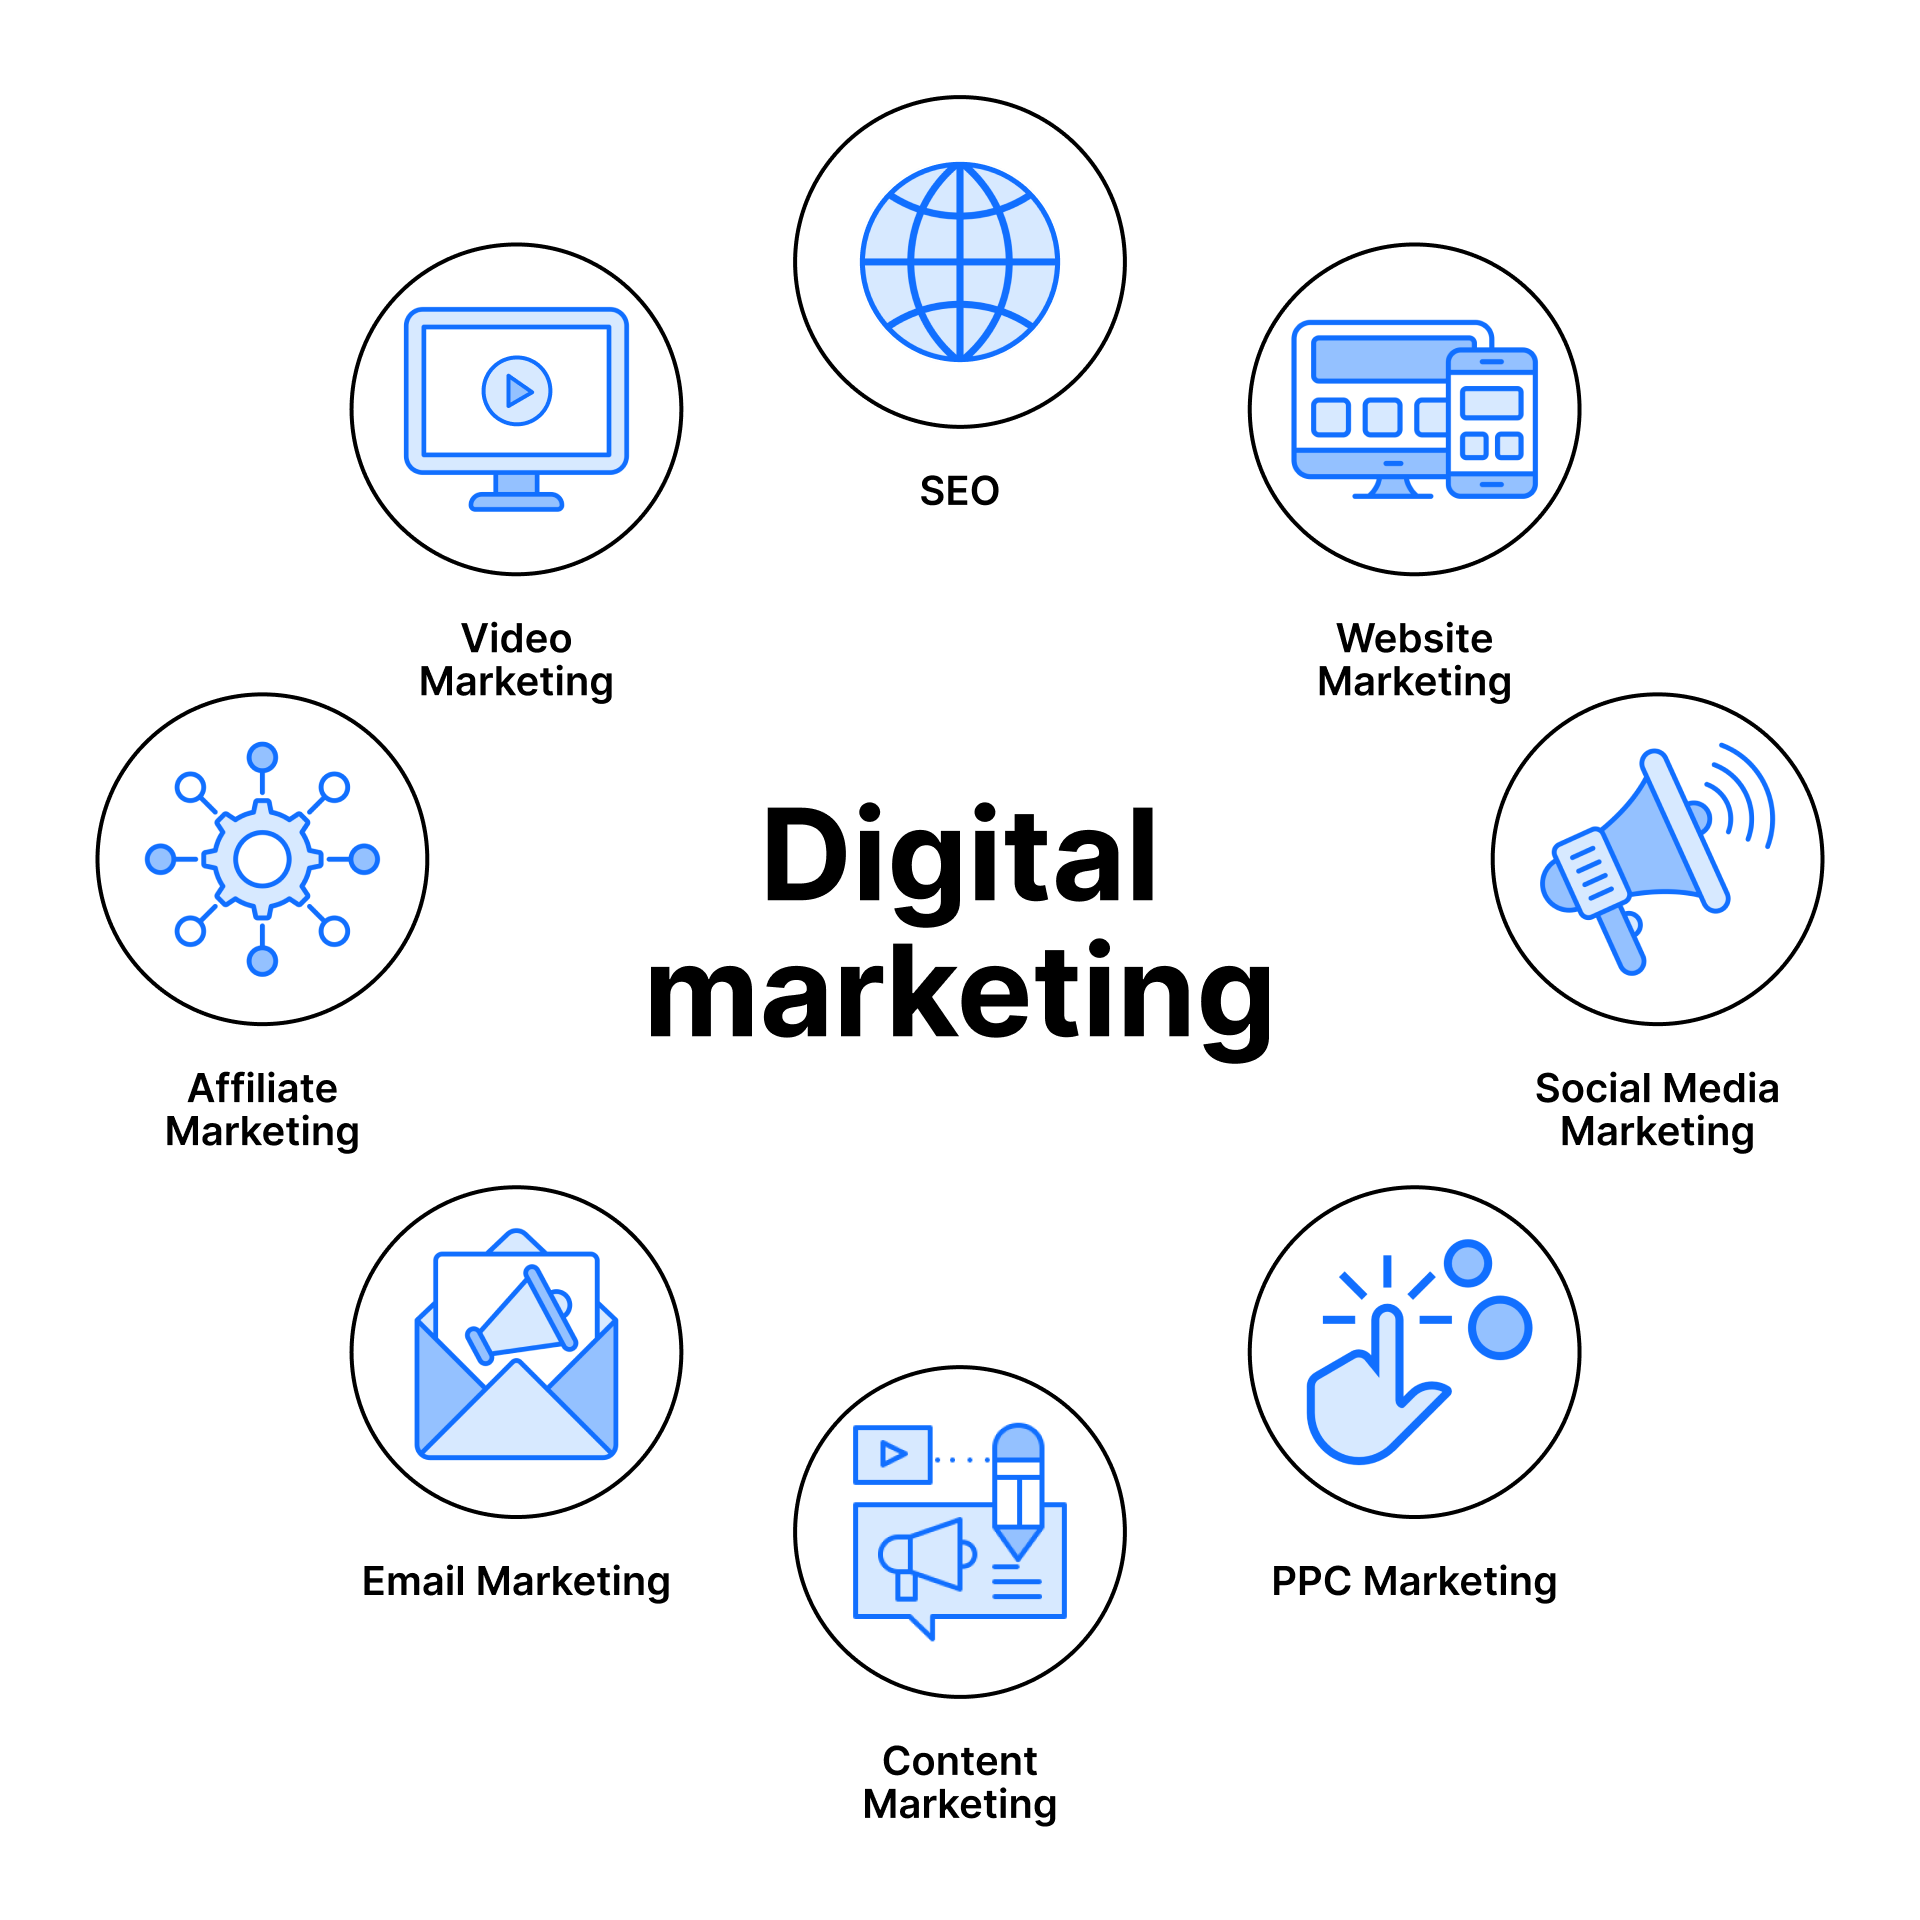 Digital marketing components